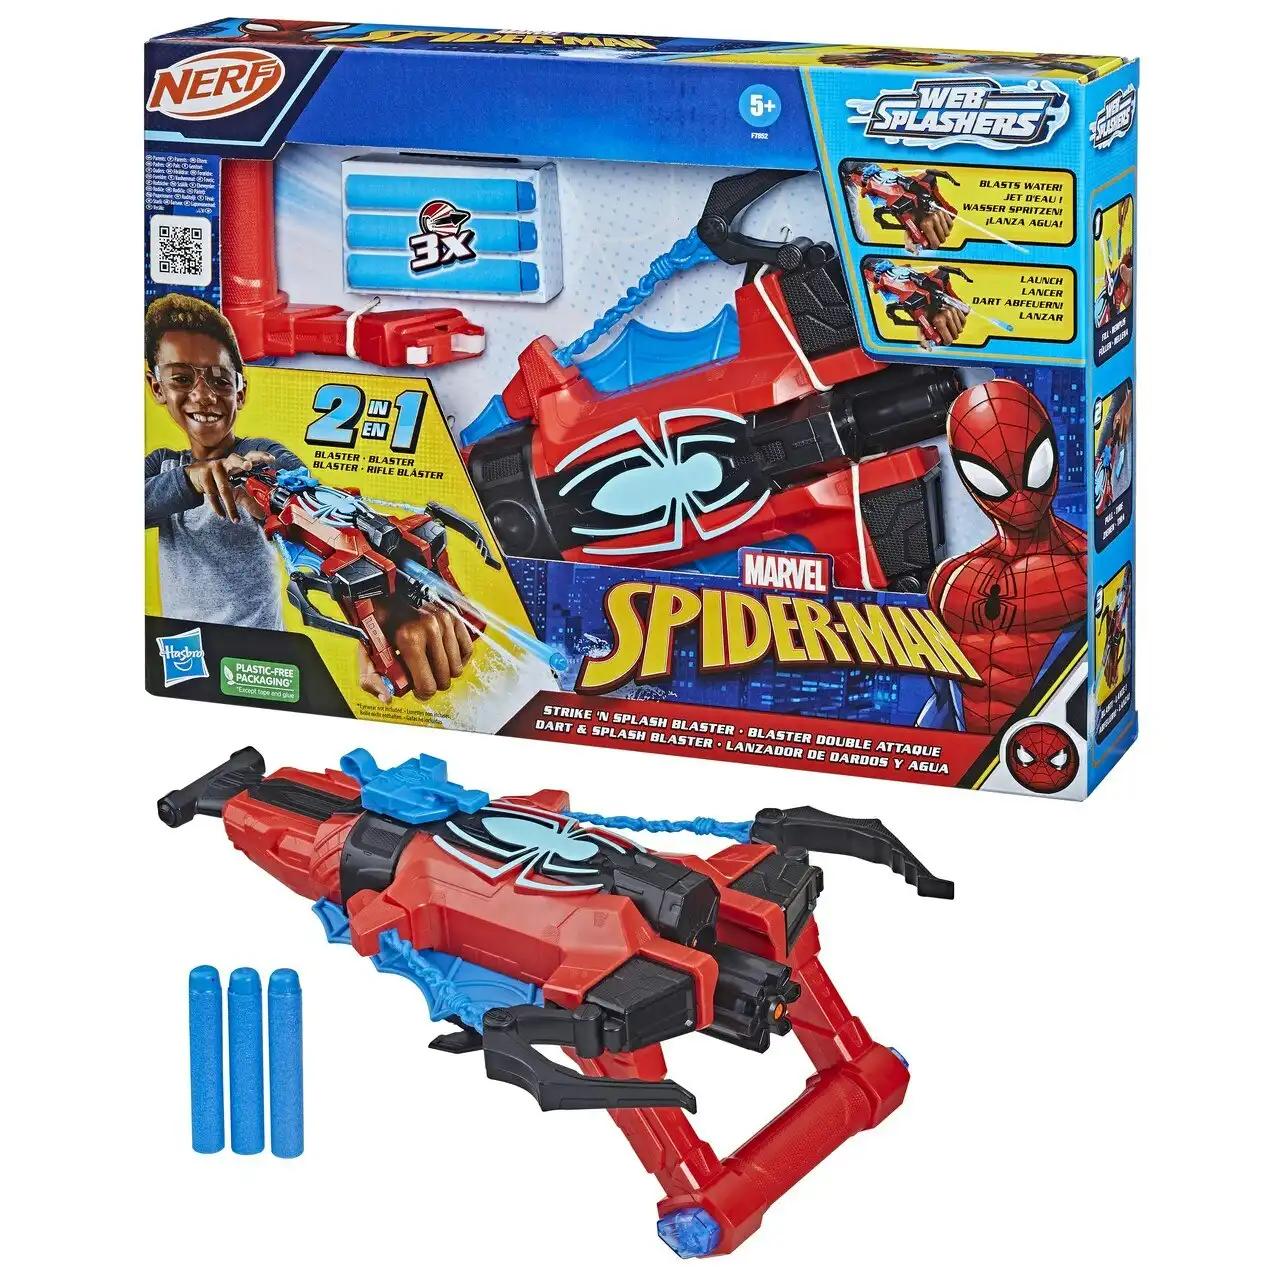 Marvel Spider-Man NERF Strike 'N Blaster